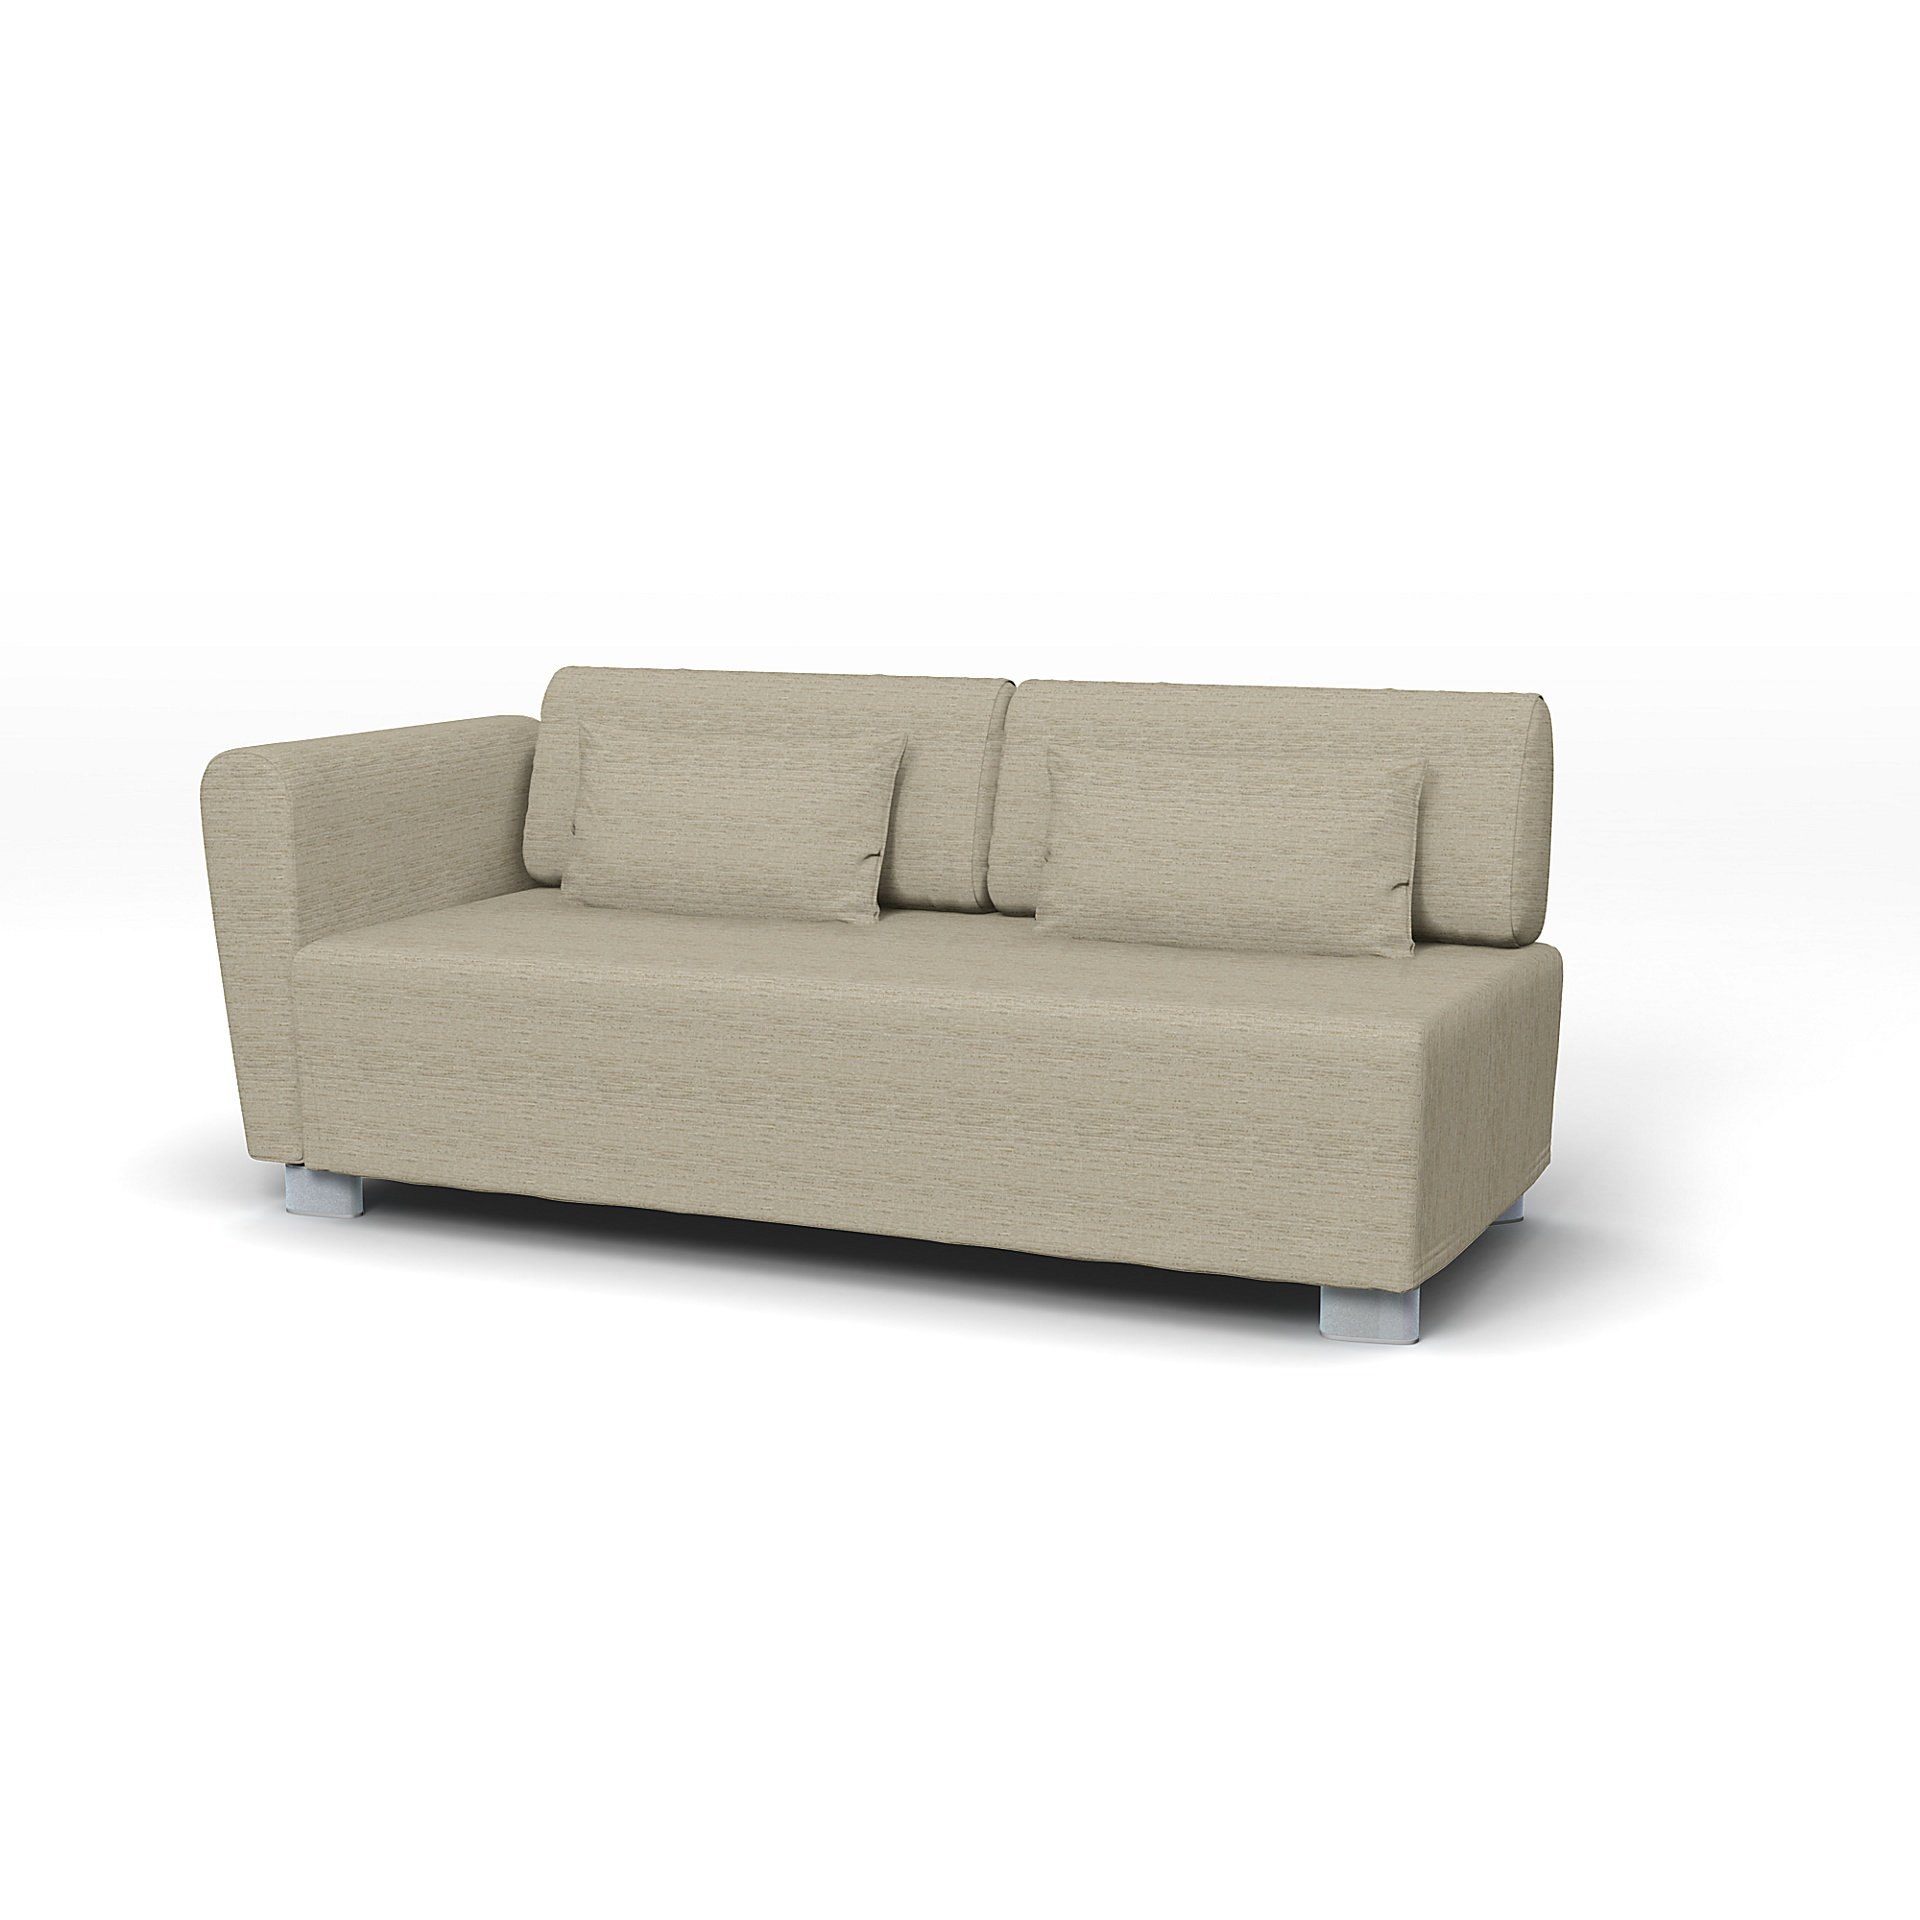 IKEA - Mysinge 2 Seater Sofa with Armrest Cover, Light Sand, Boucle & Texture - Bemz